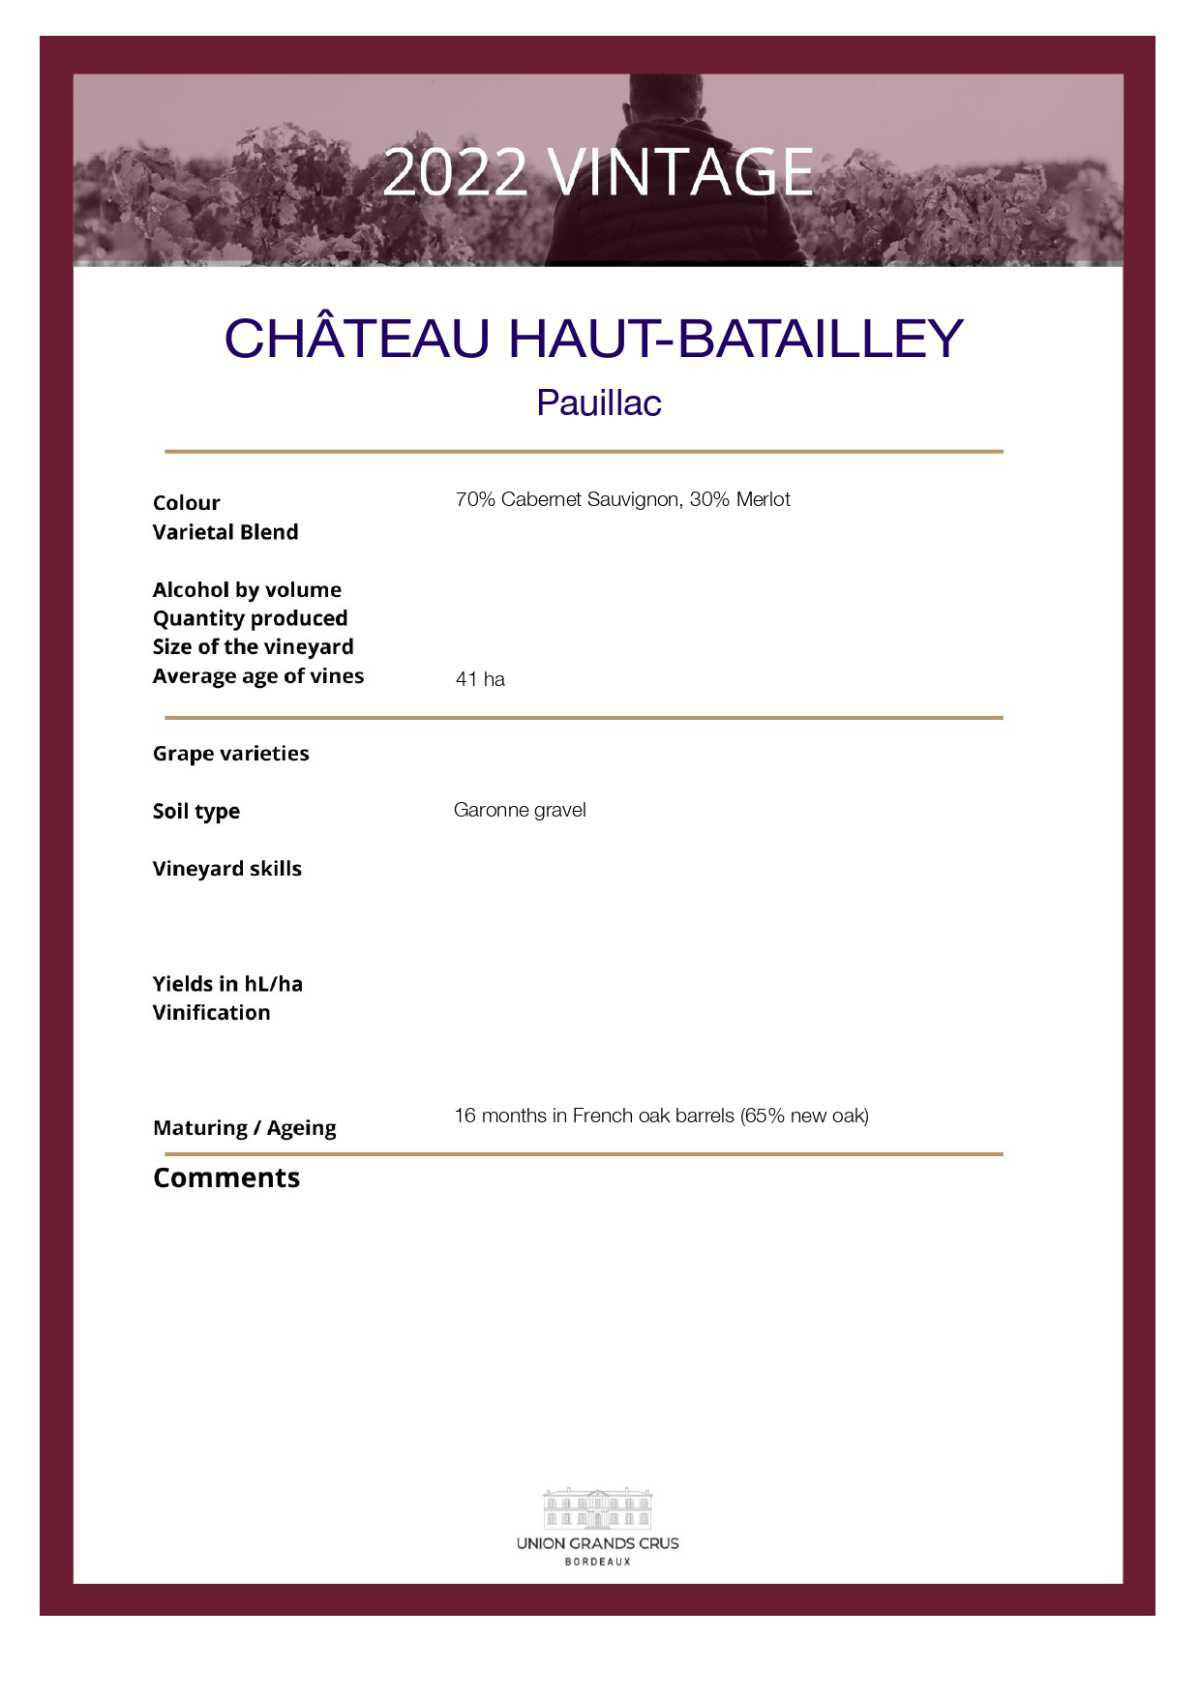 Château Haut-Batailley 